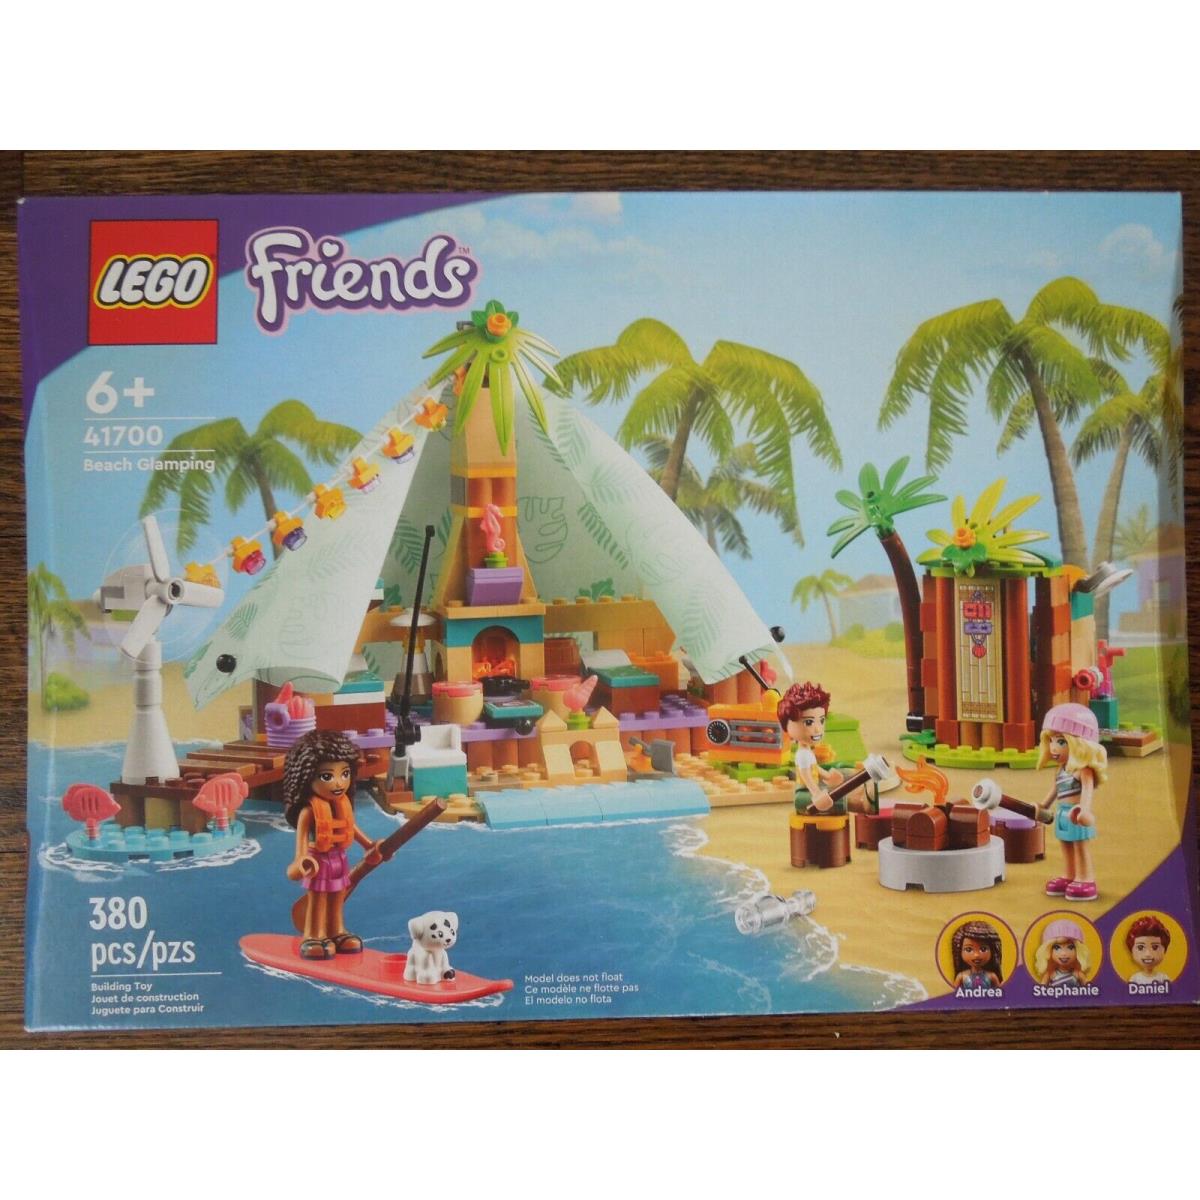 Lego Friends Beach Glamping 41700 6+ 380pcs